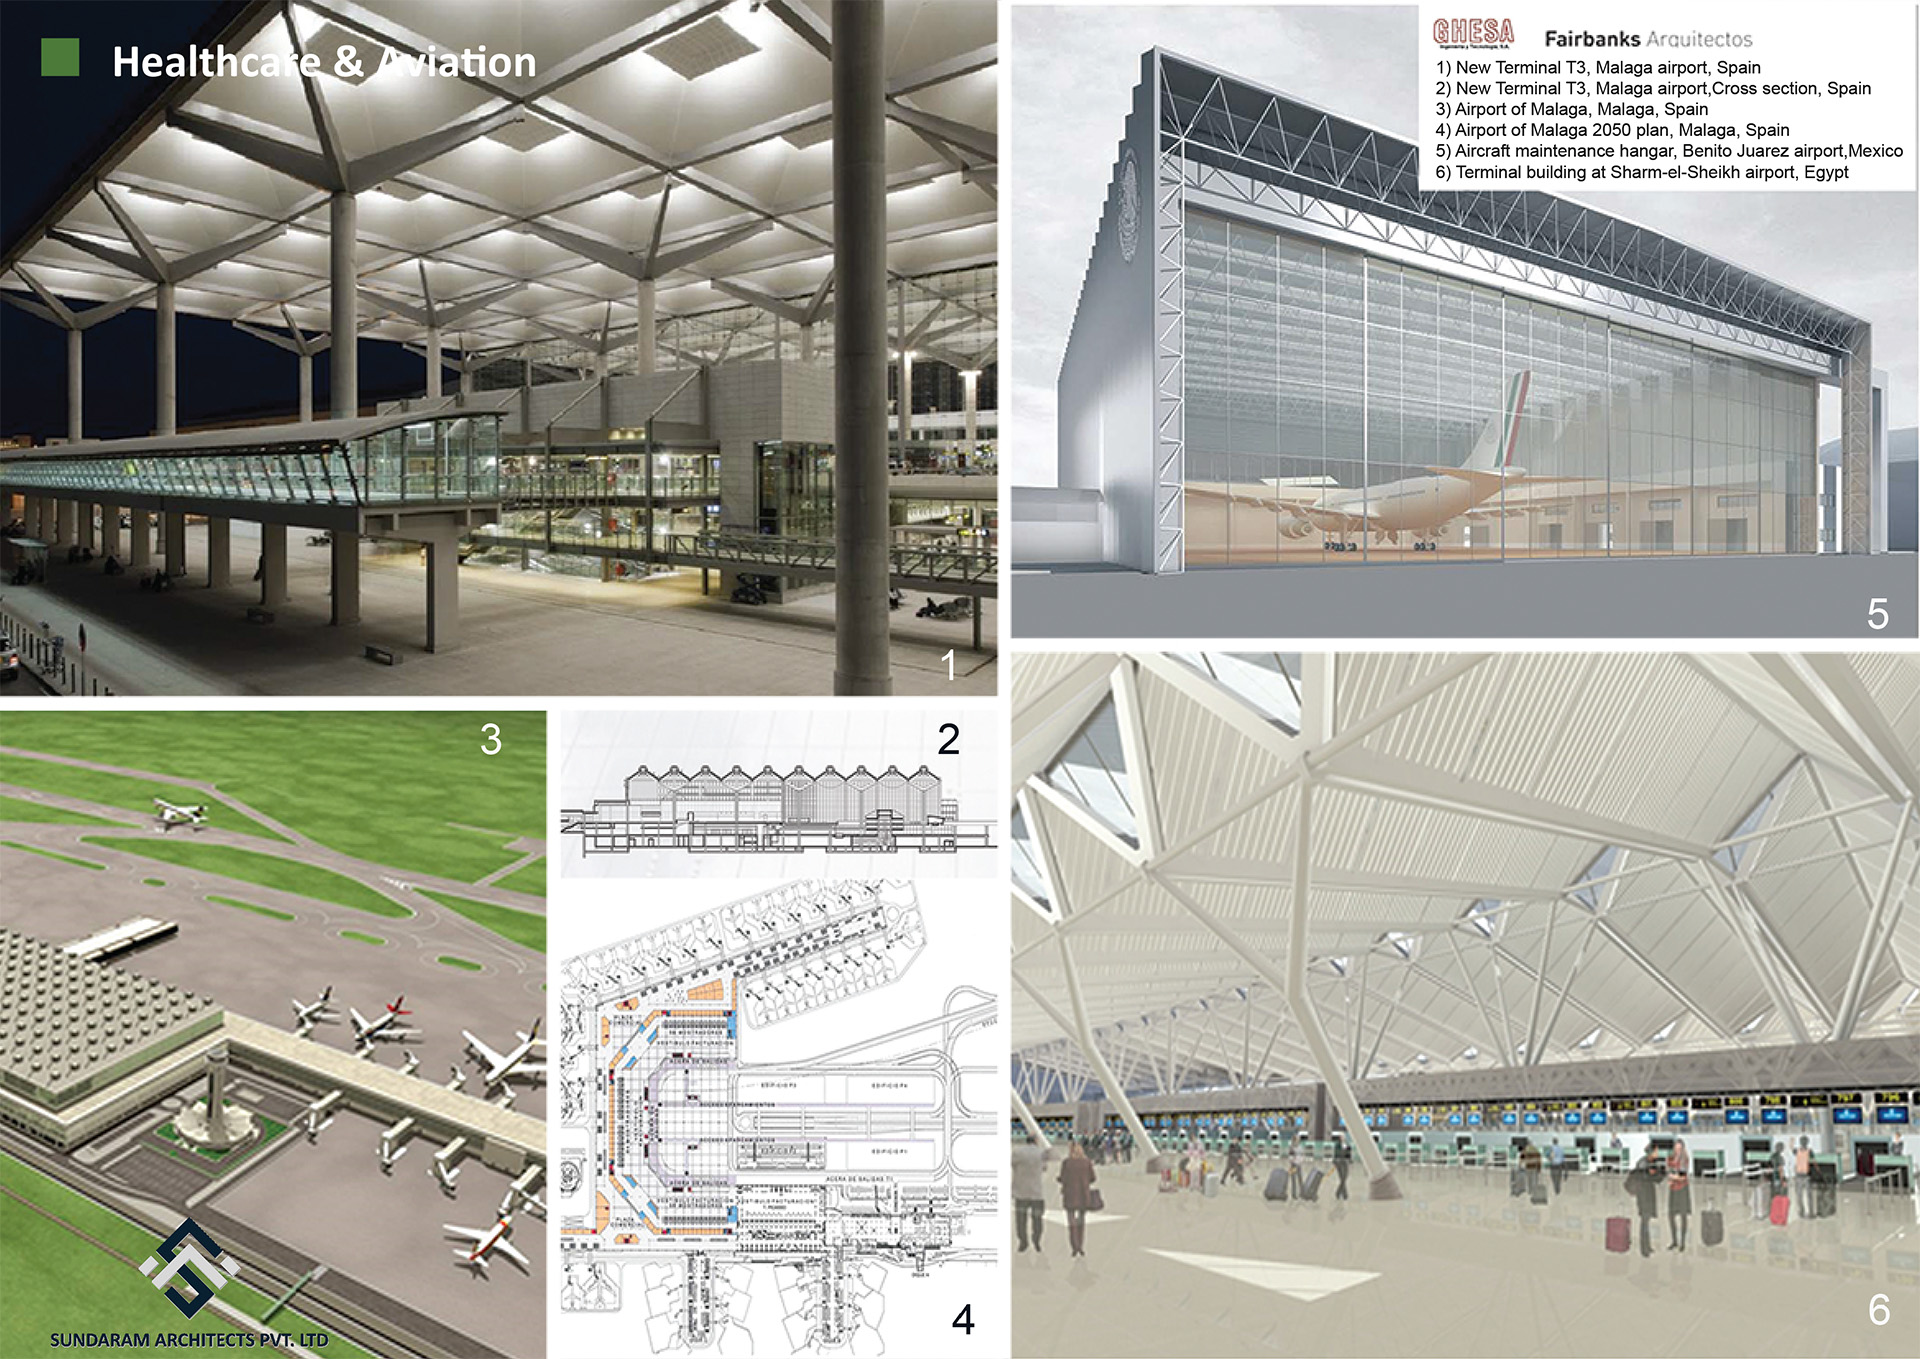 GHESA, Fairbanks Arquitectos - Healthcare & Aviation Design